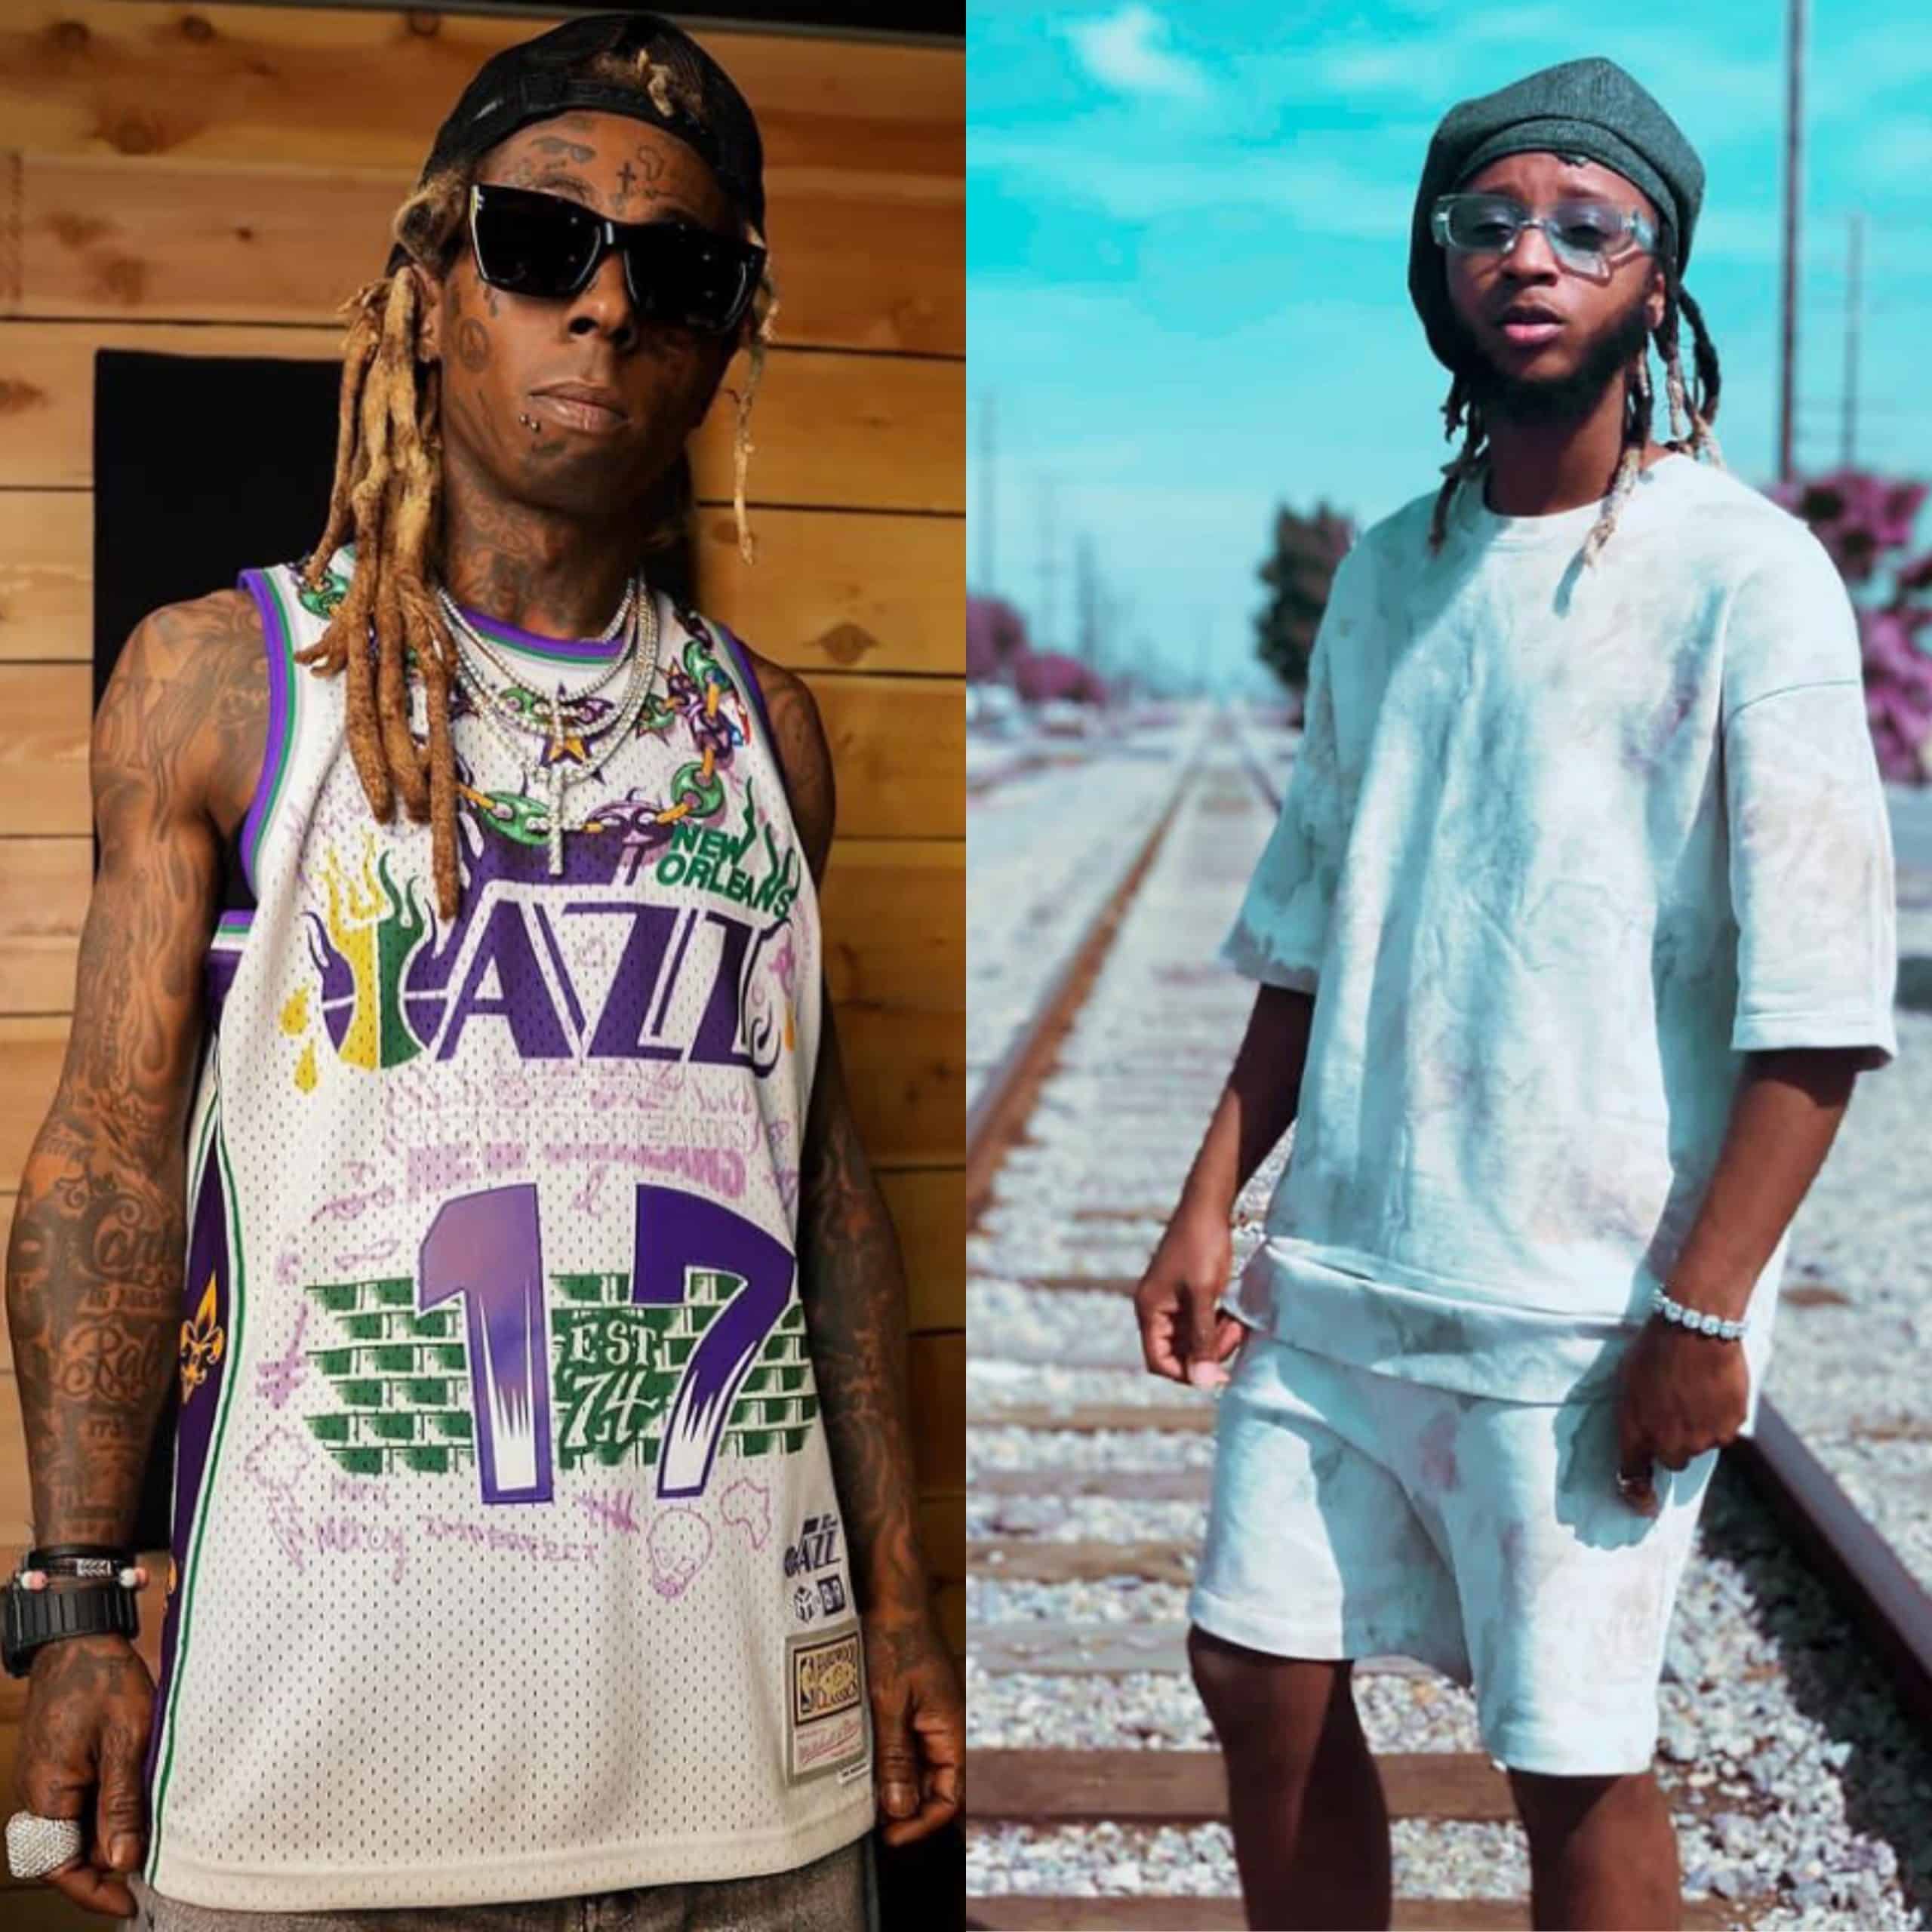 Lil Wayne and Young 6ix